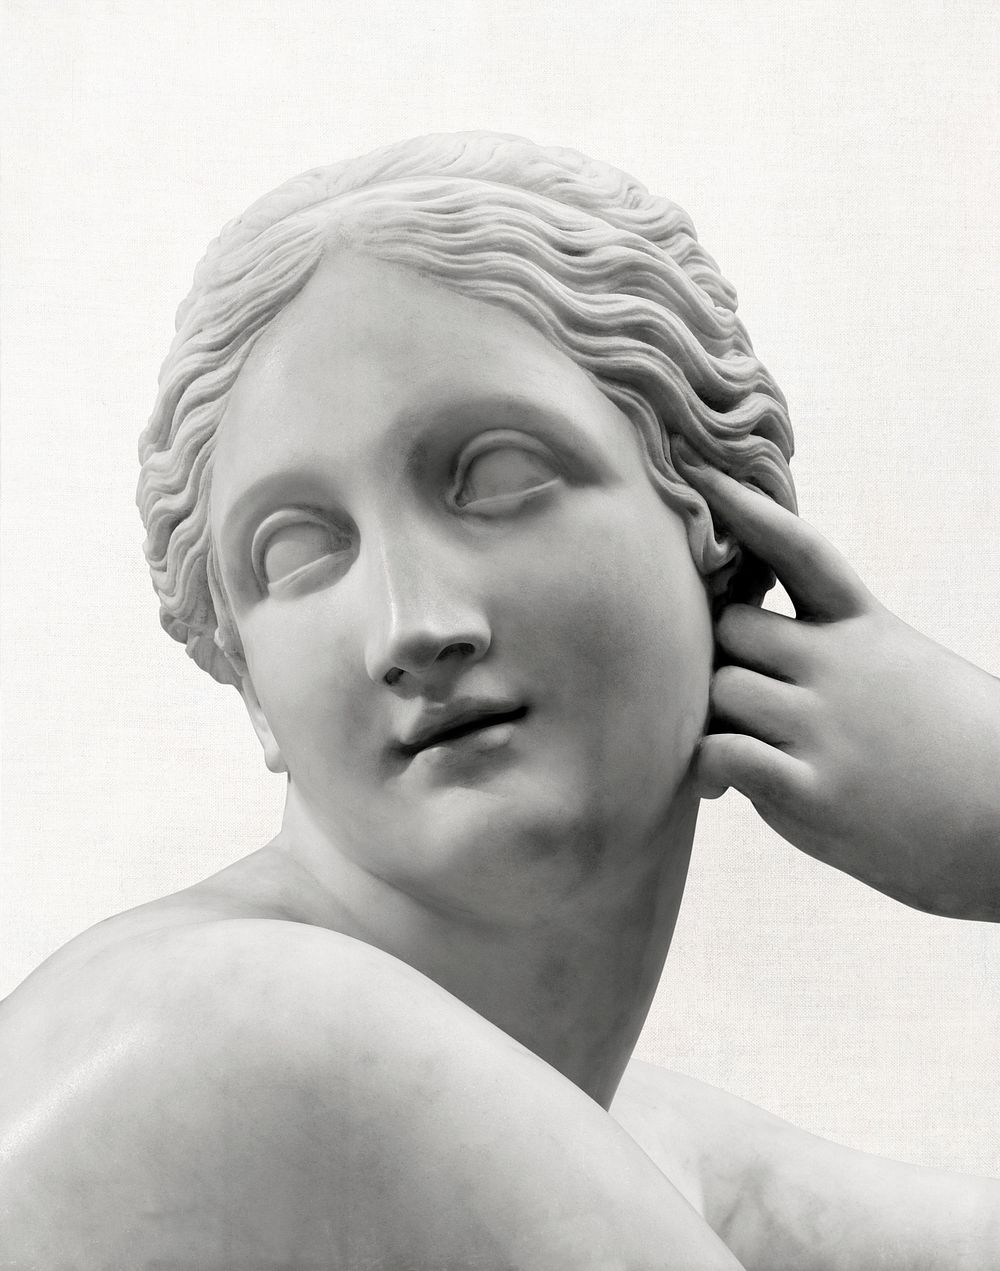 Naiad sculpture, Greek mythology, Antonio Canova's artwork remastered by rawpixel